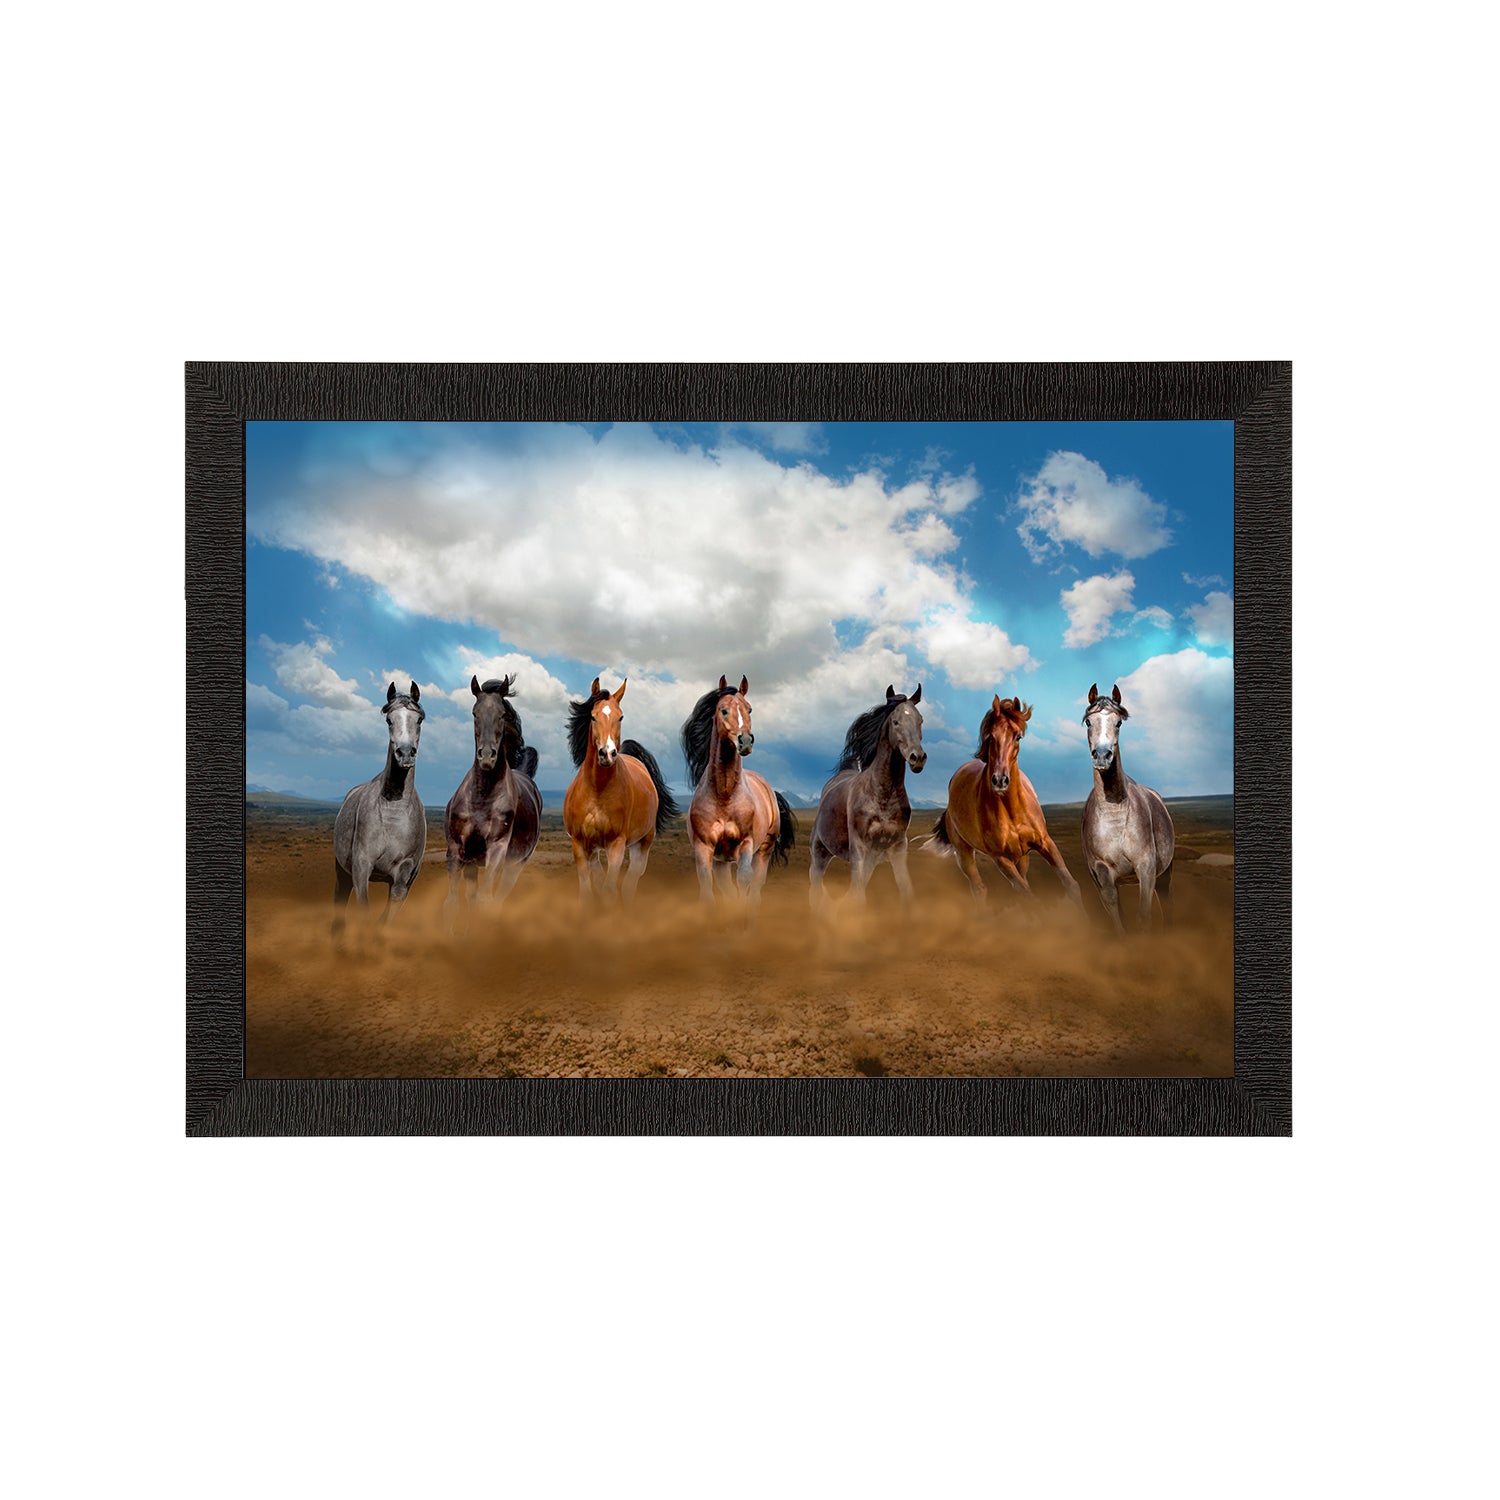 Seven Running Horses Painting Digital Printed Animal Wall Art